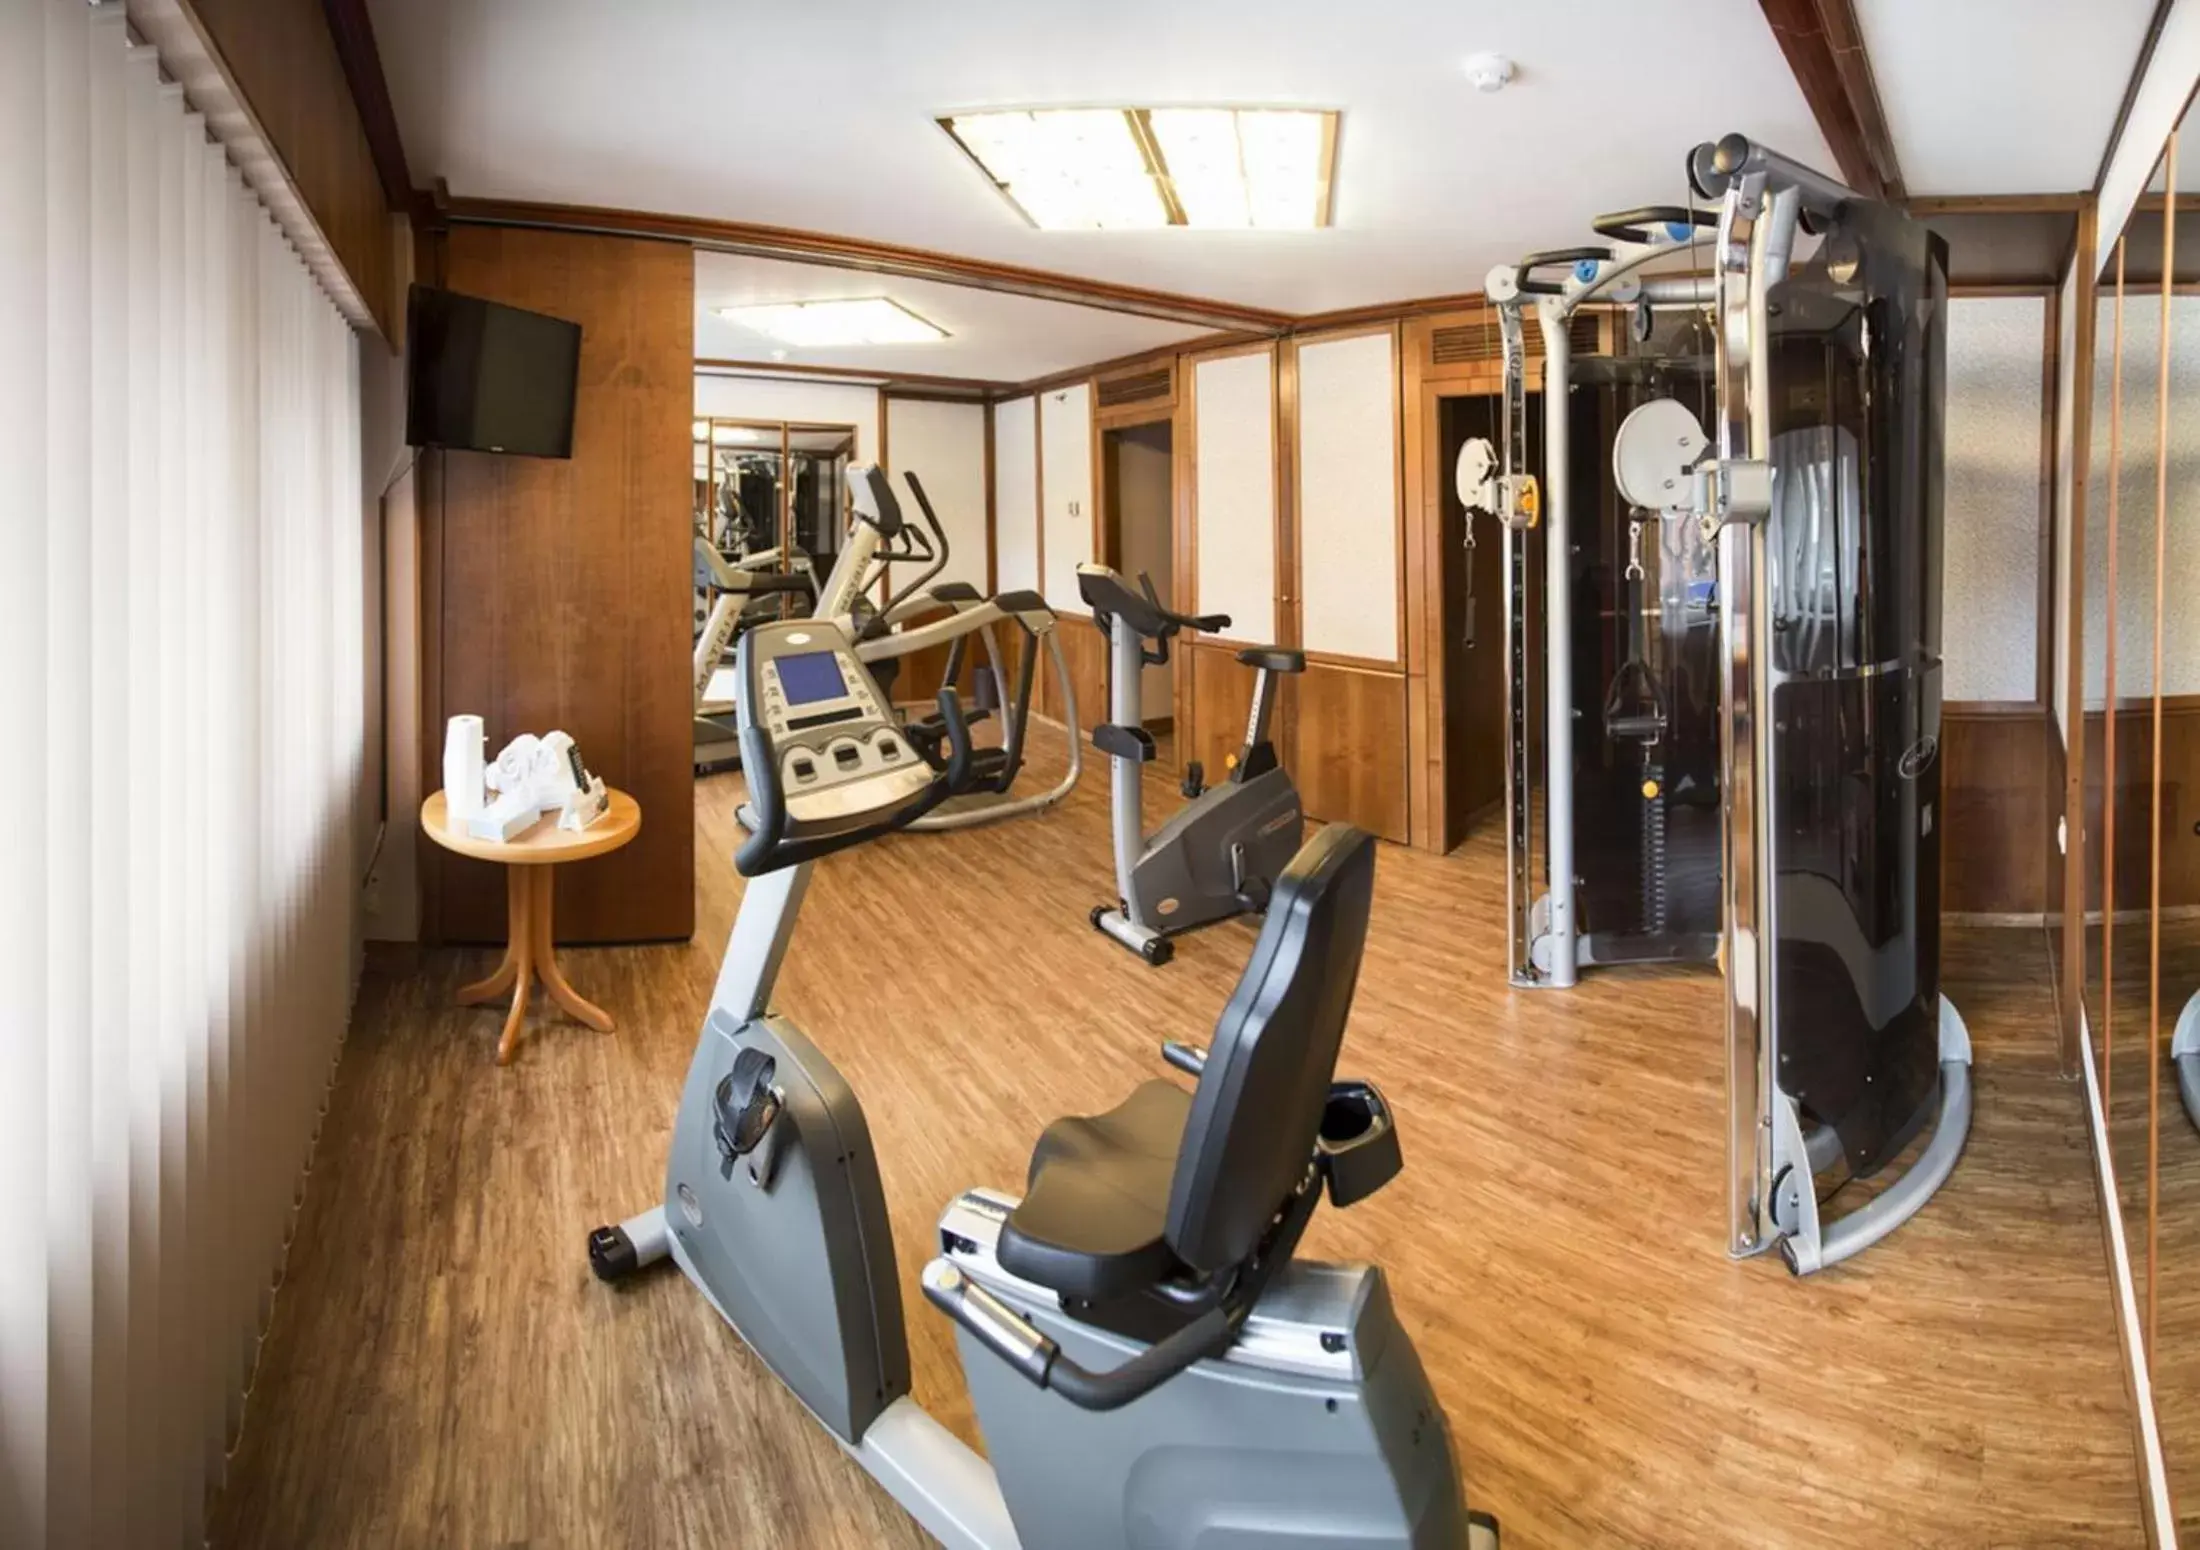 Fitness centre/facilities, Fitness Center/Facilities in Radisson Blu Hotel Cottbus